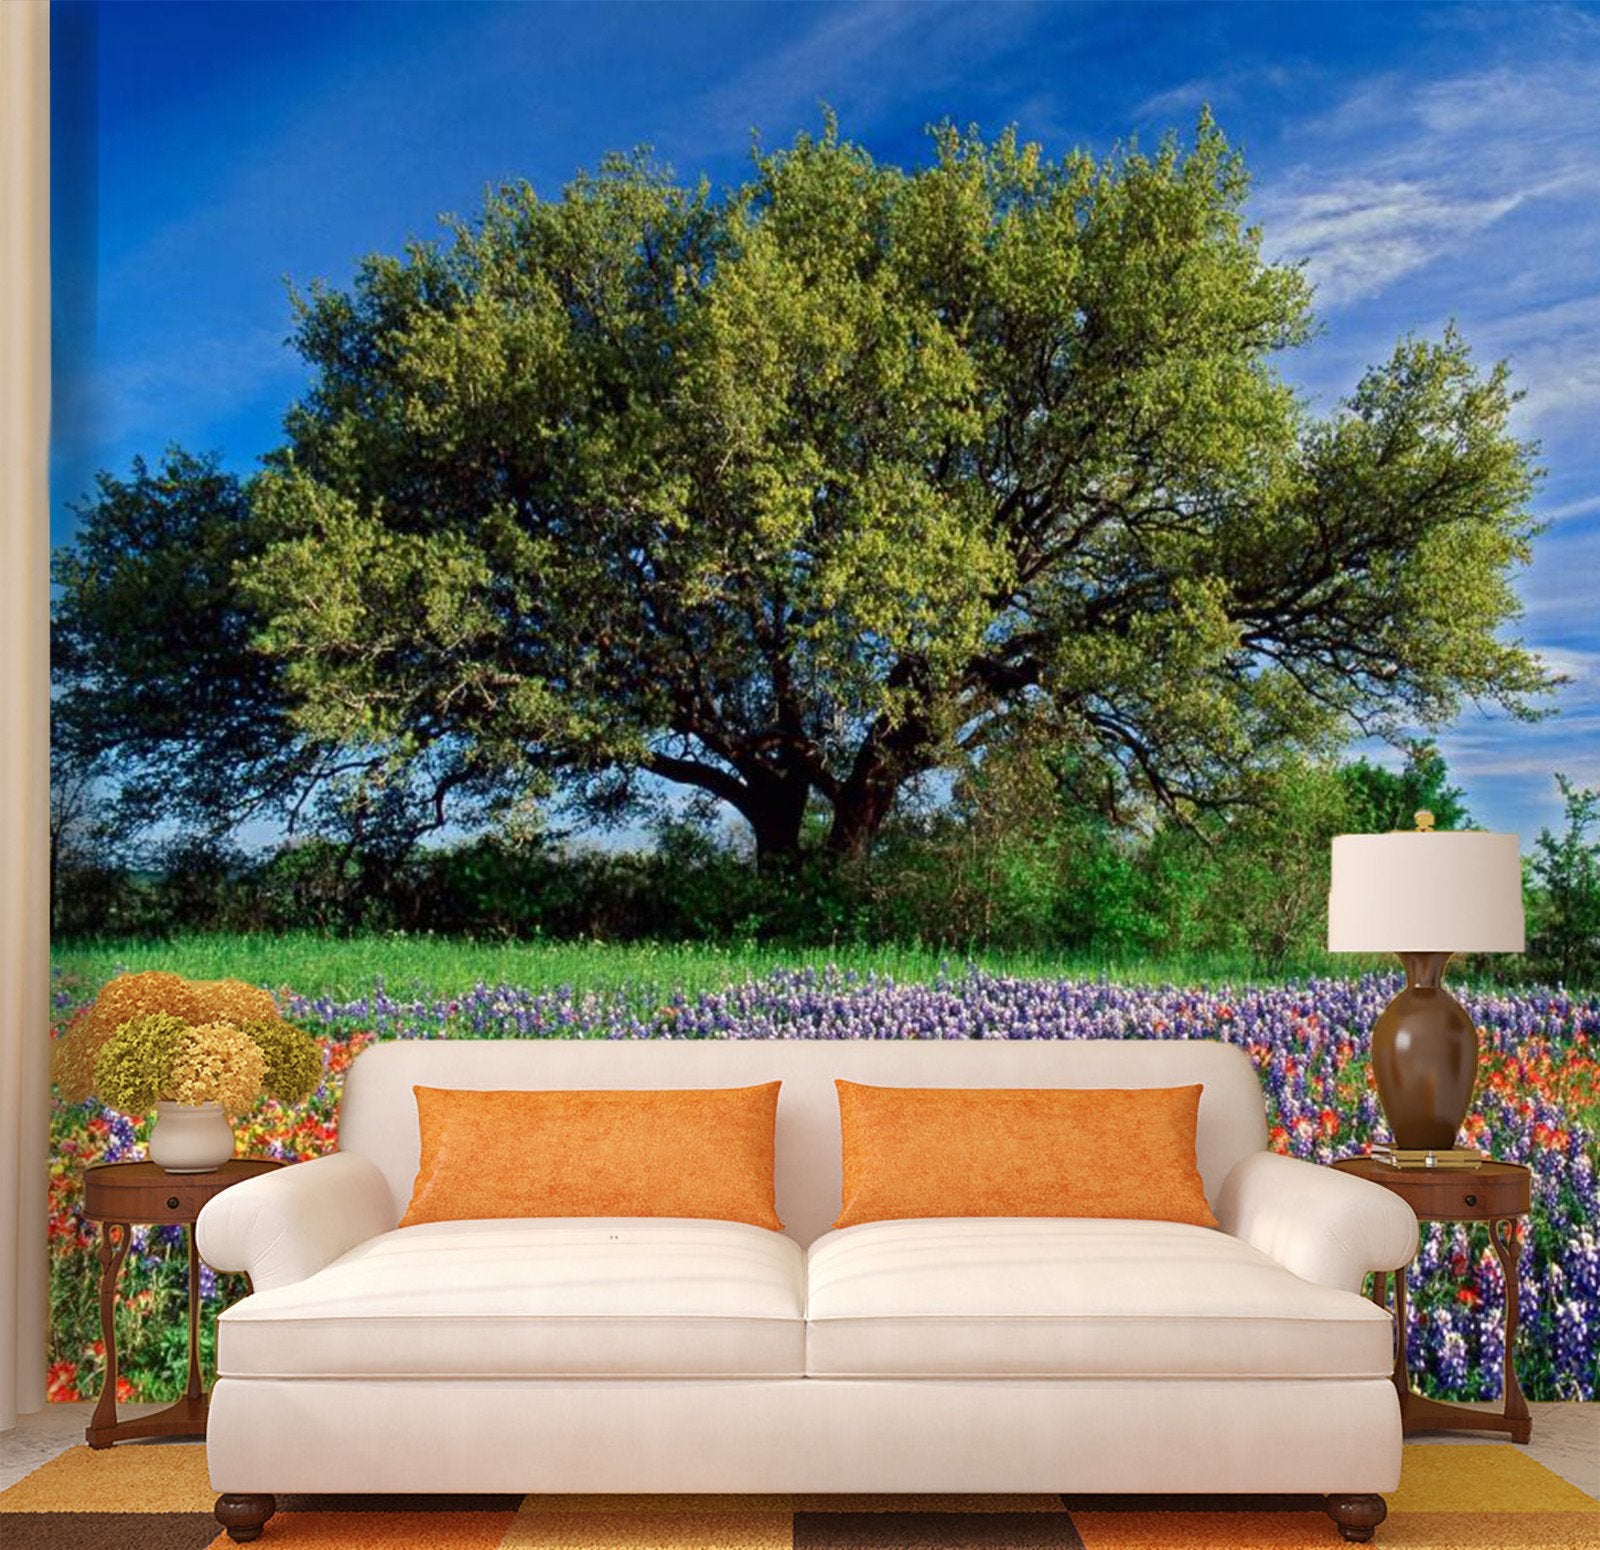 Big Green Tree With Lavender 3 Wallpaper AJ Wallpaper 1 